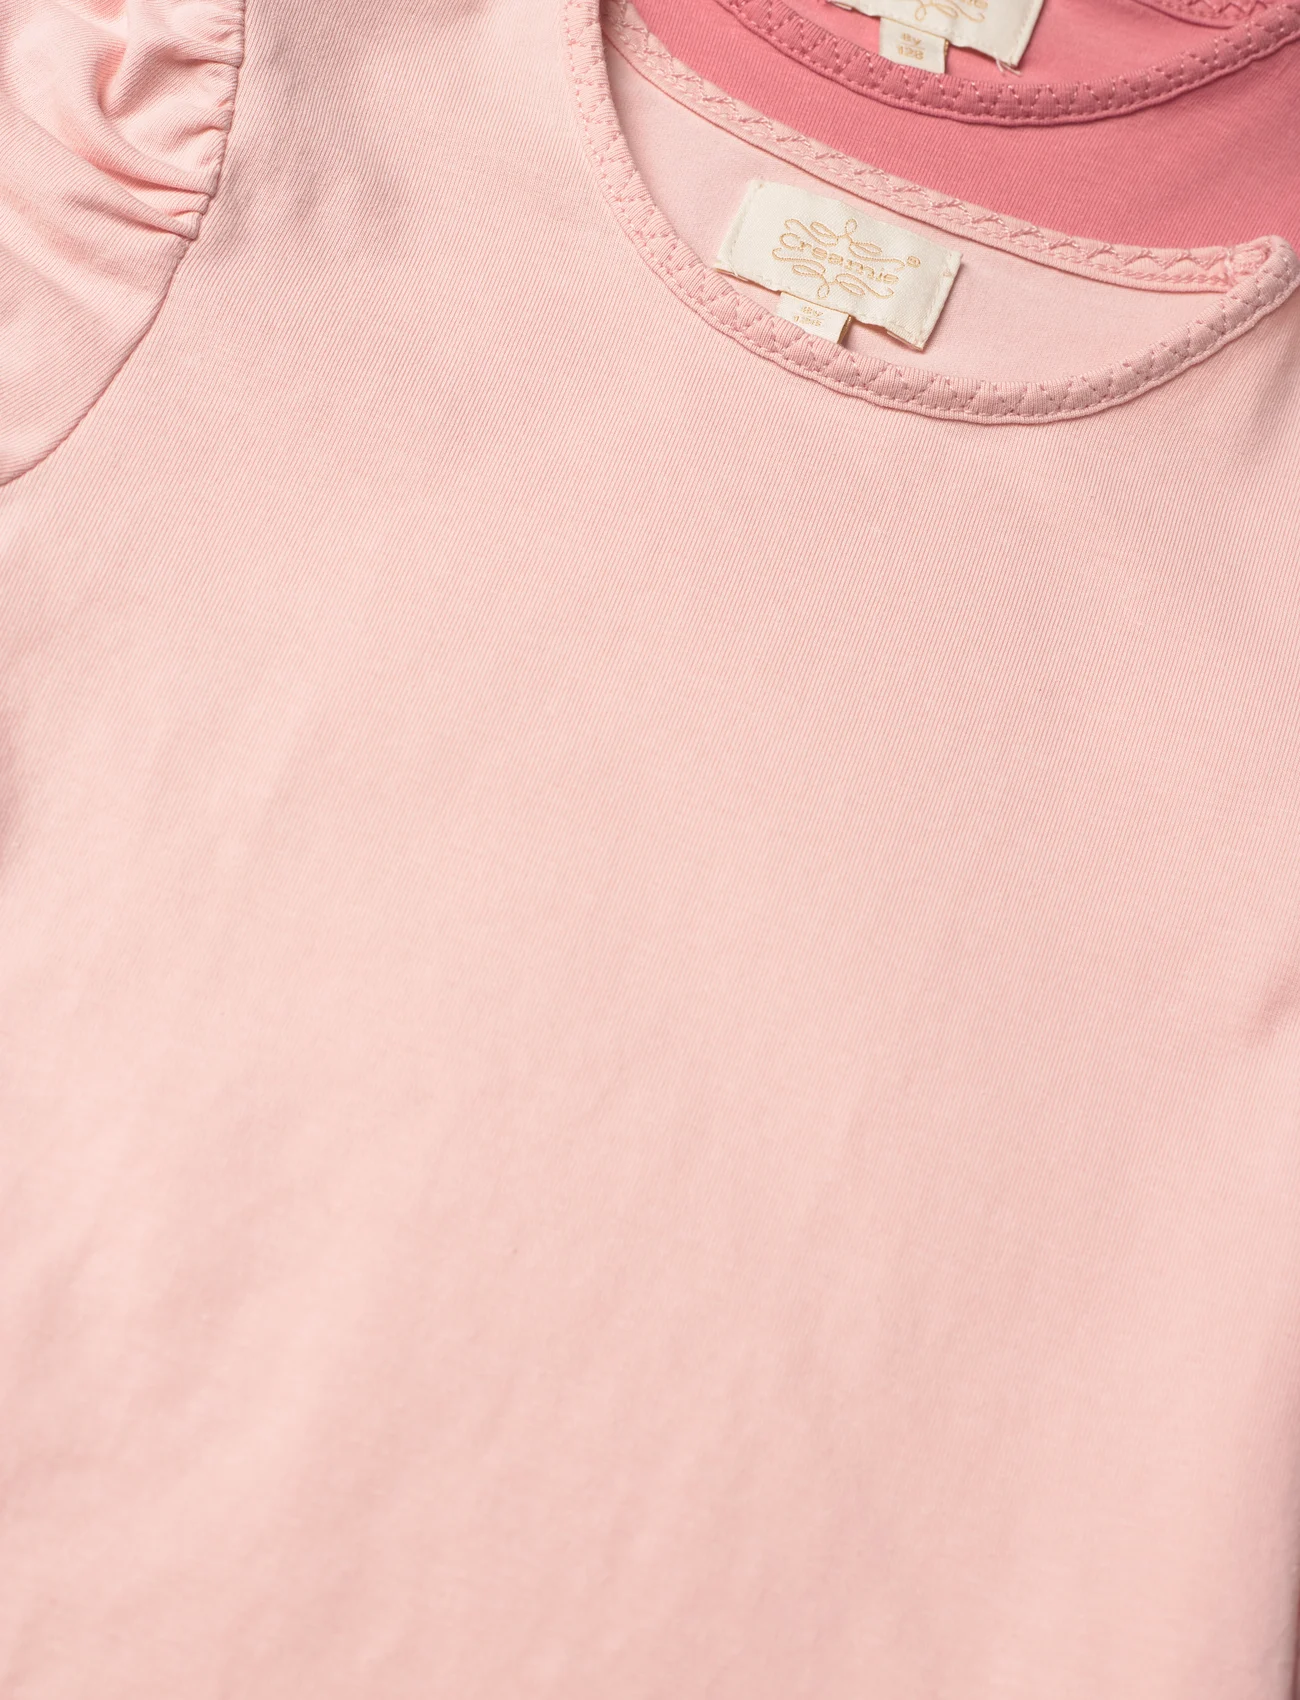 Creamie - T-shirt SS 2-Pack - short-sleeved - peachskin - 1